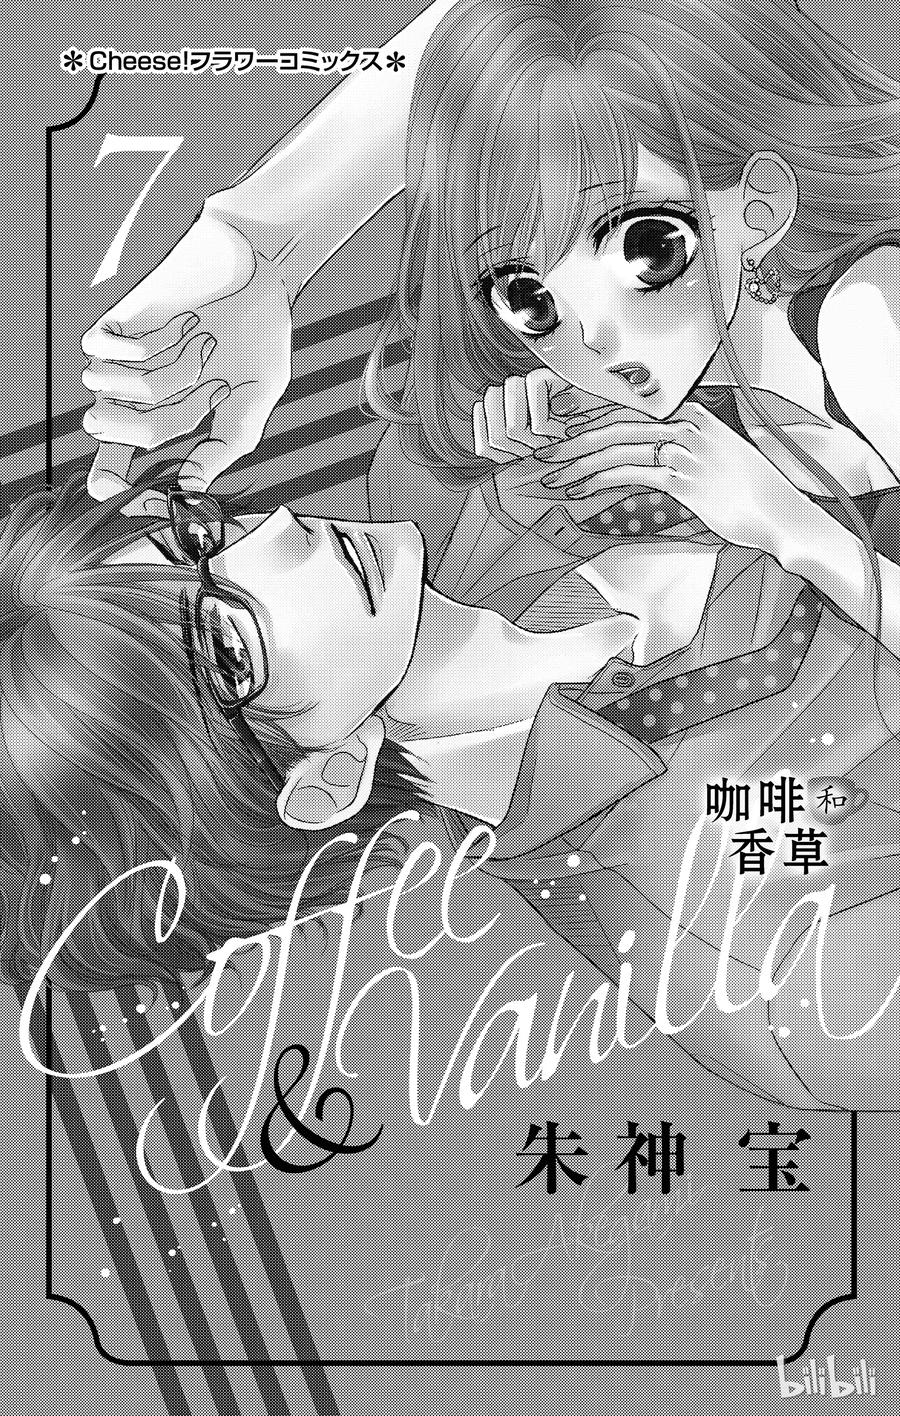 Coffee & Vanilla 咖啡和香草 - 26 秘書和要求(1/2) - 3